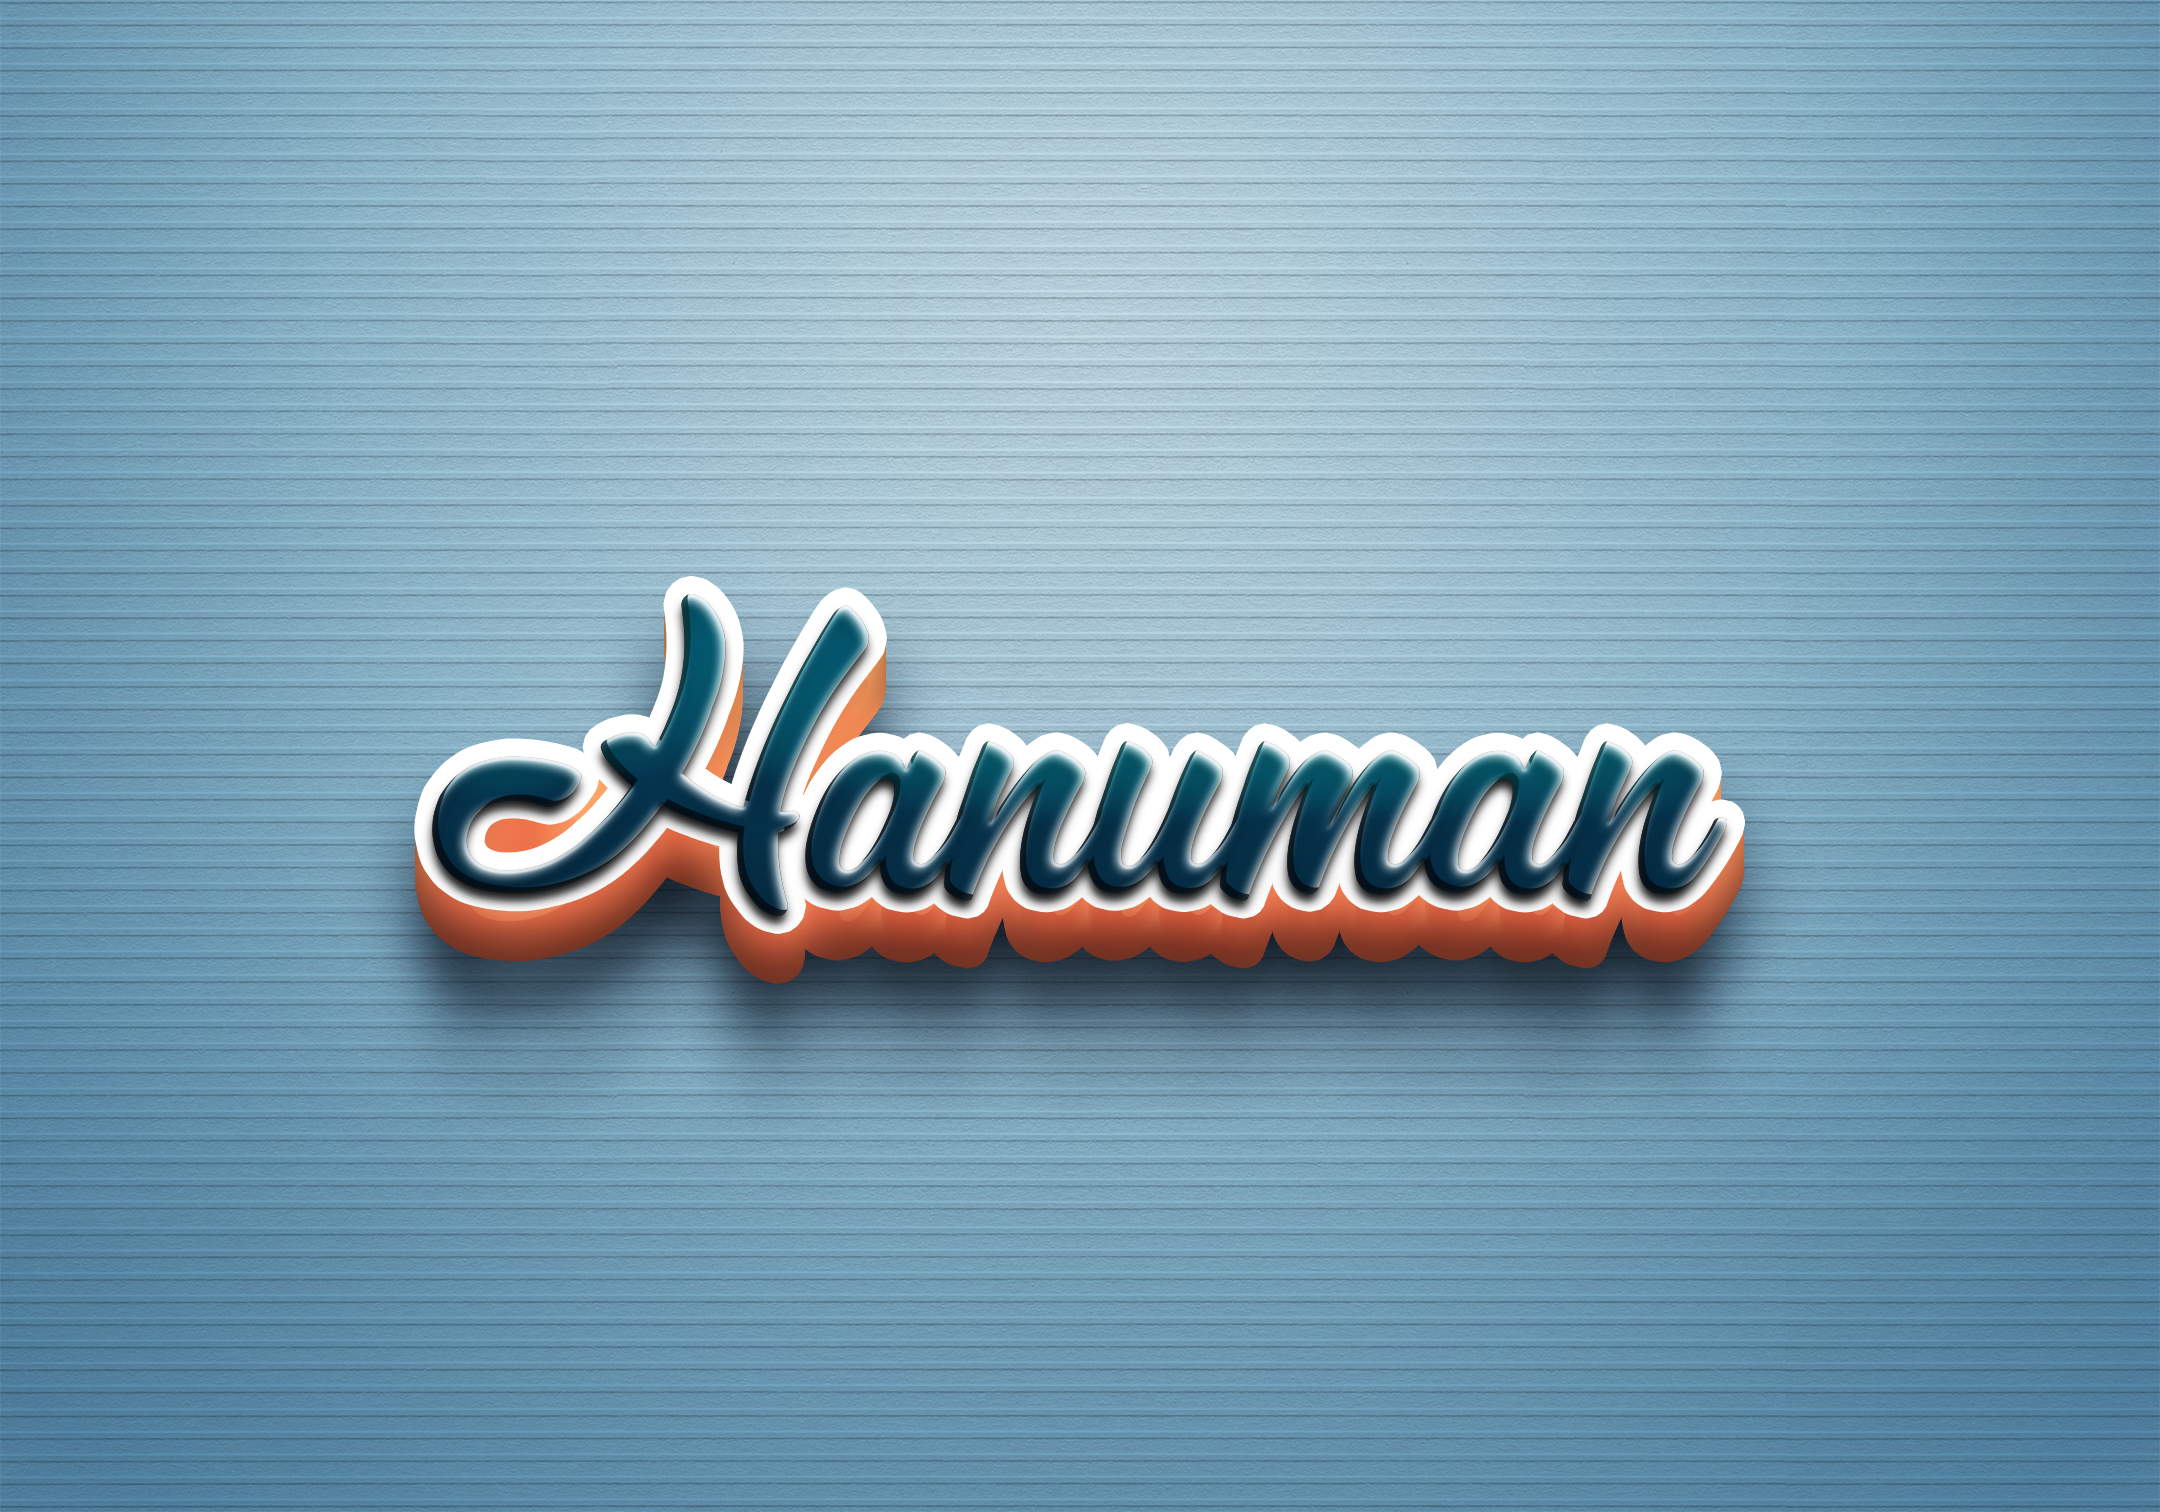 Harman name harman name tattoo, tattoo of harman name, - YouTube